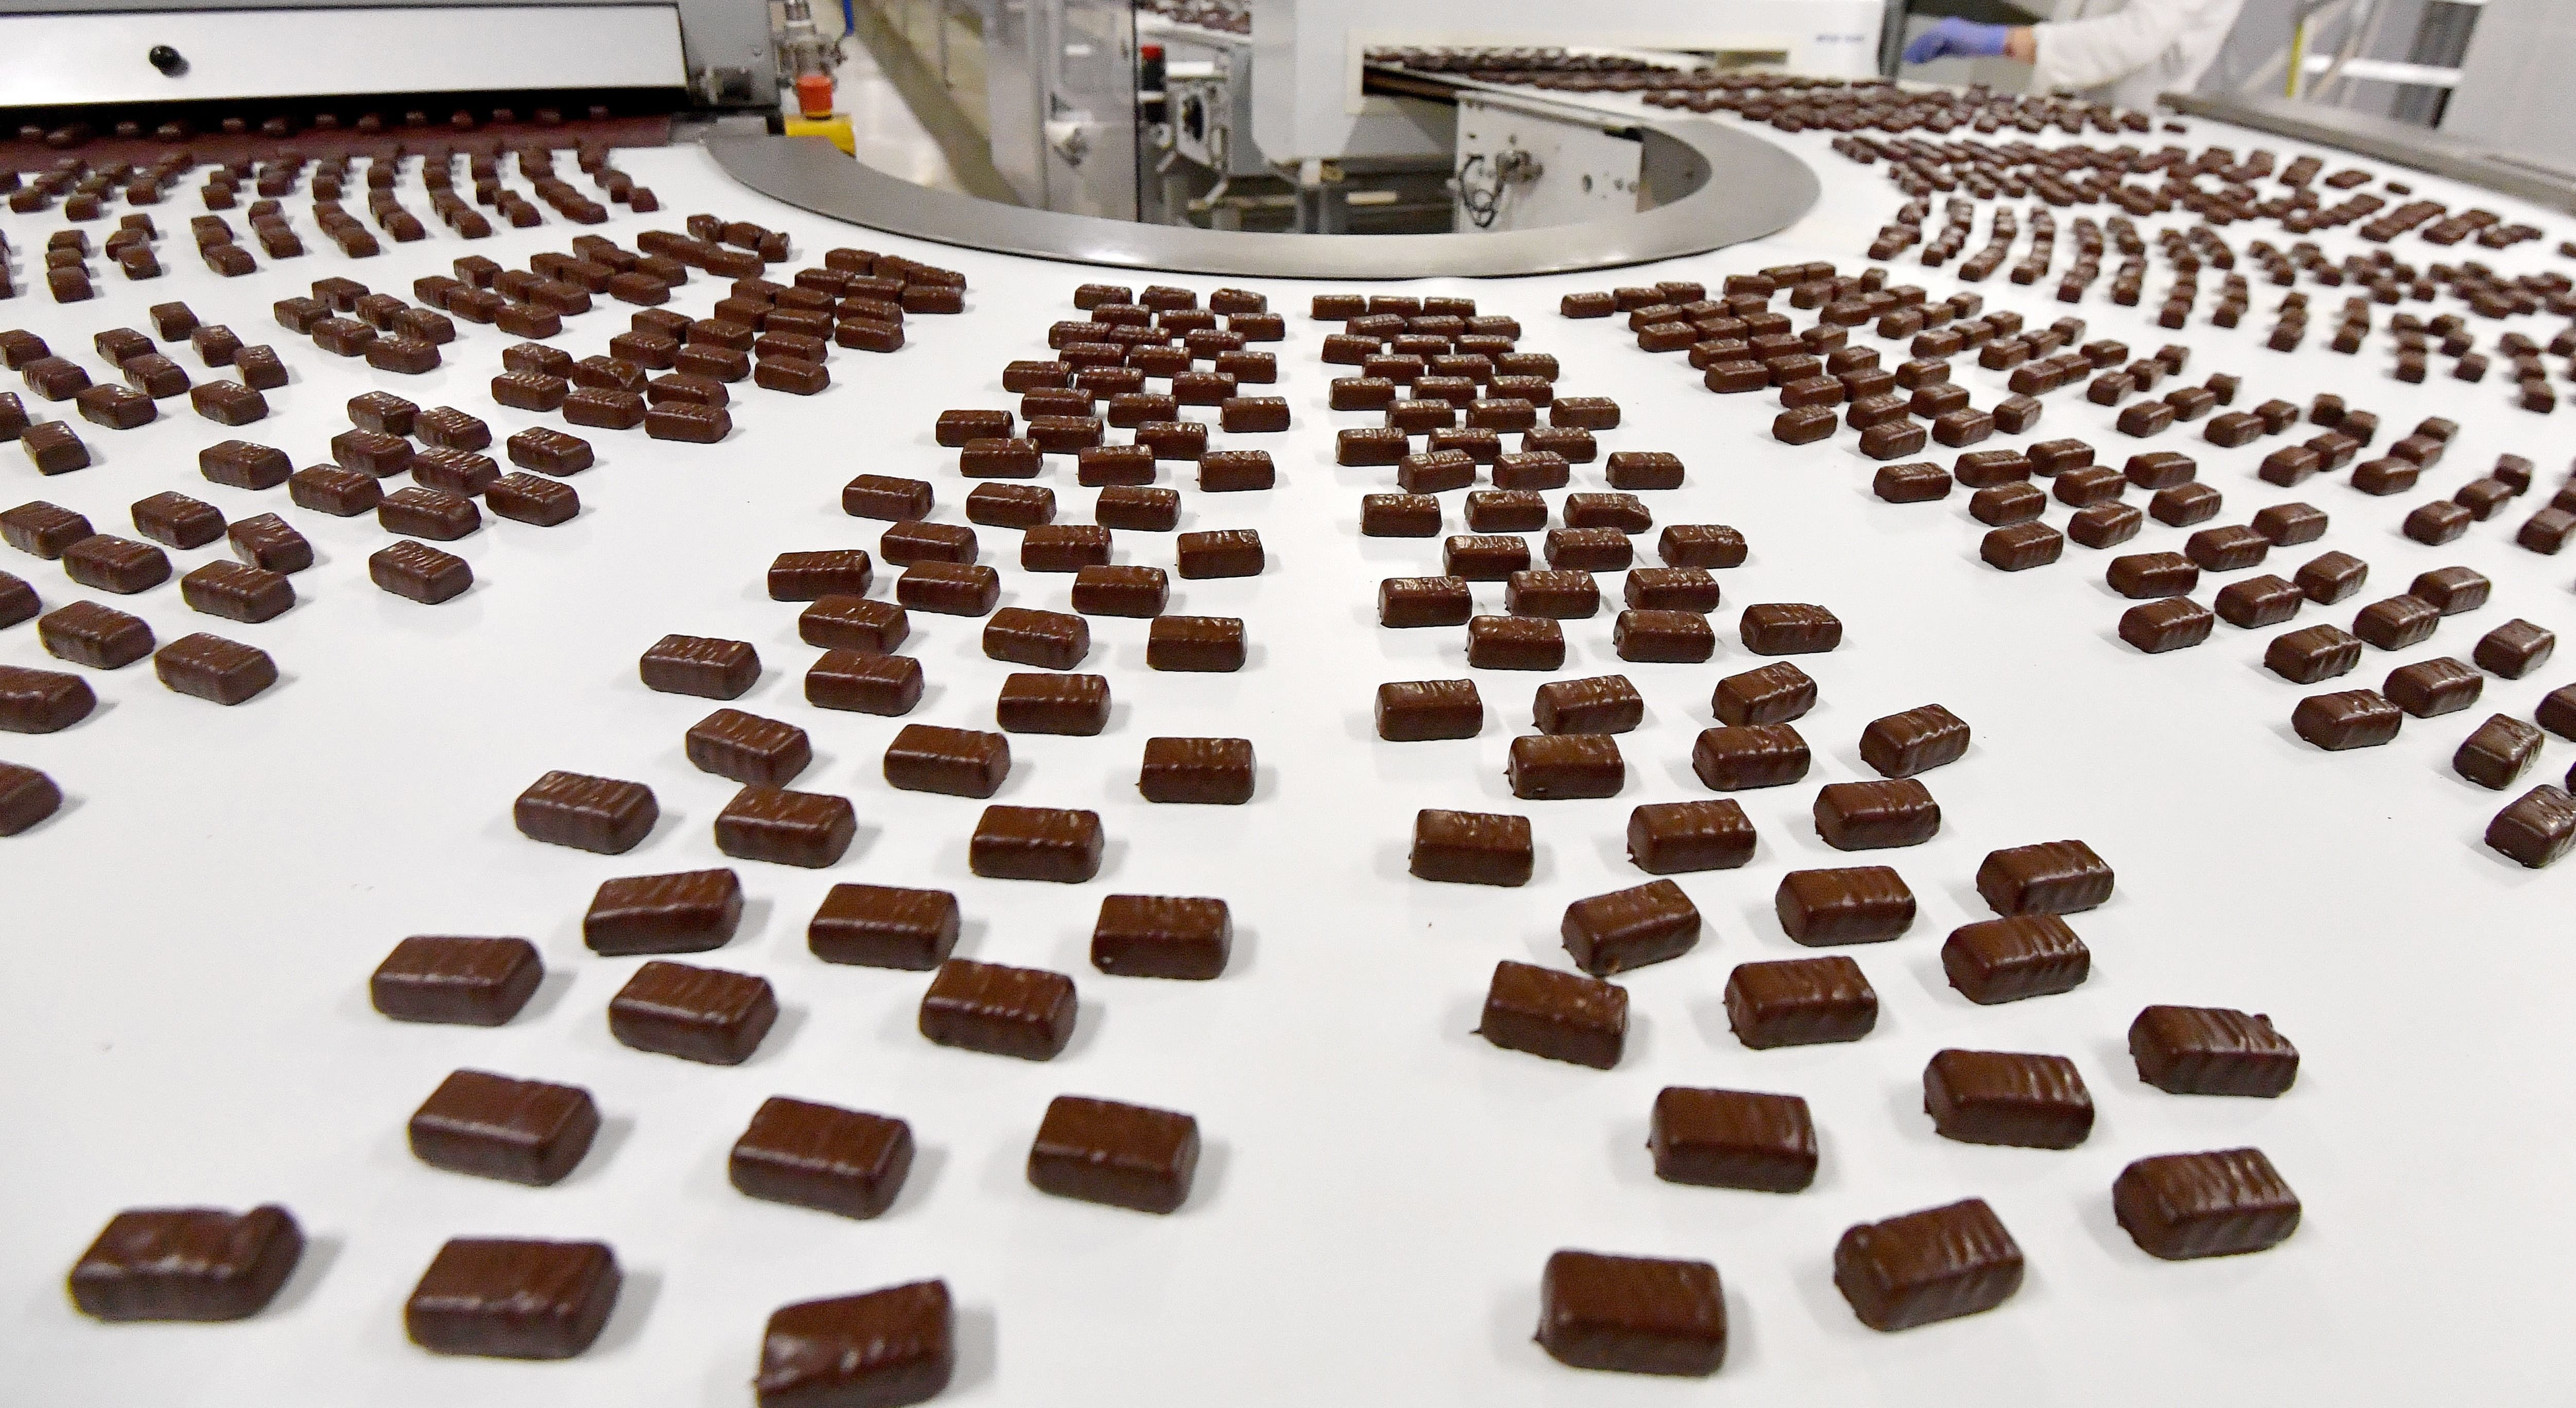 Bachmann шоколадная фабрика. Конфетная фабрика. Производство конфет. Фабрика конфет. Шоколадная фабрика конфеты.